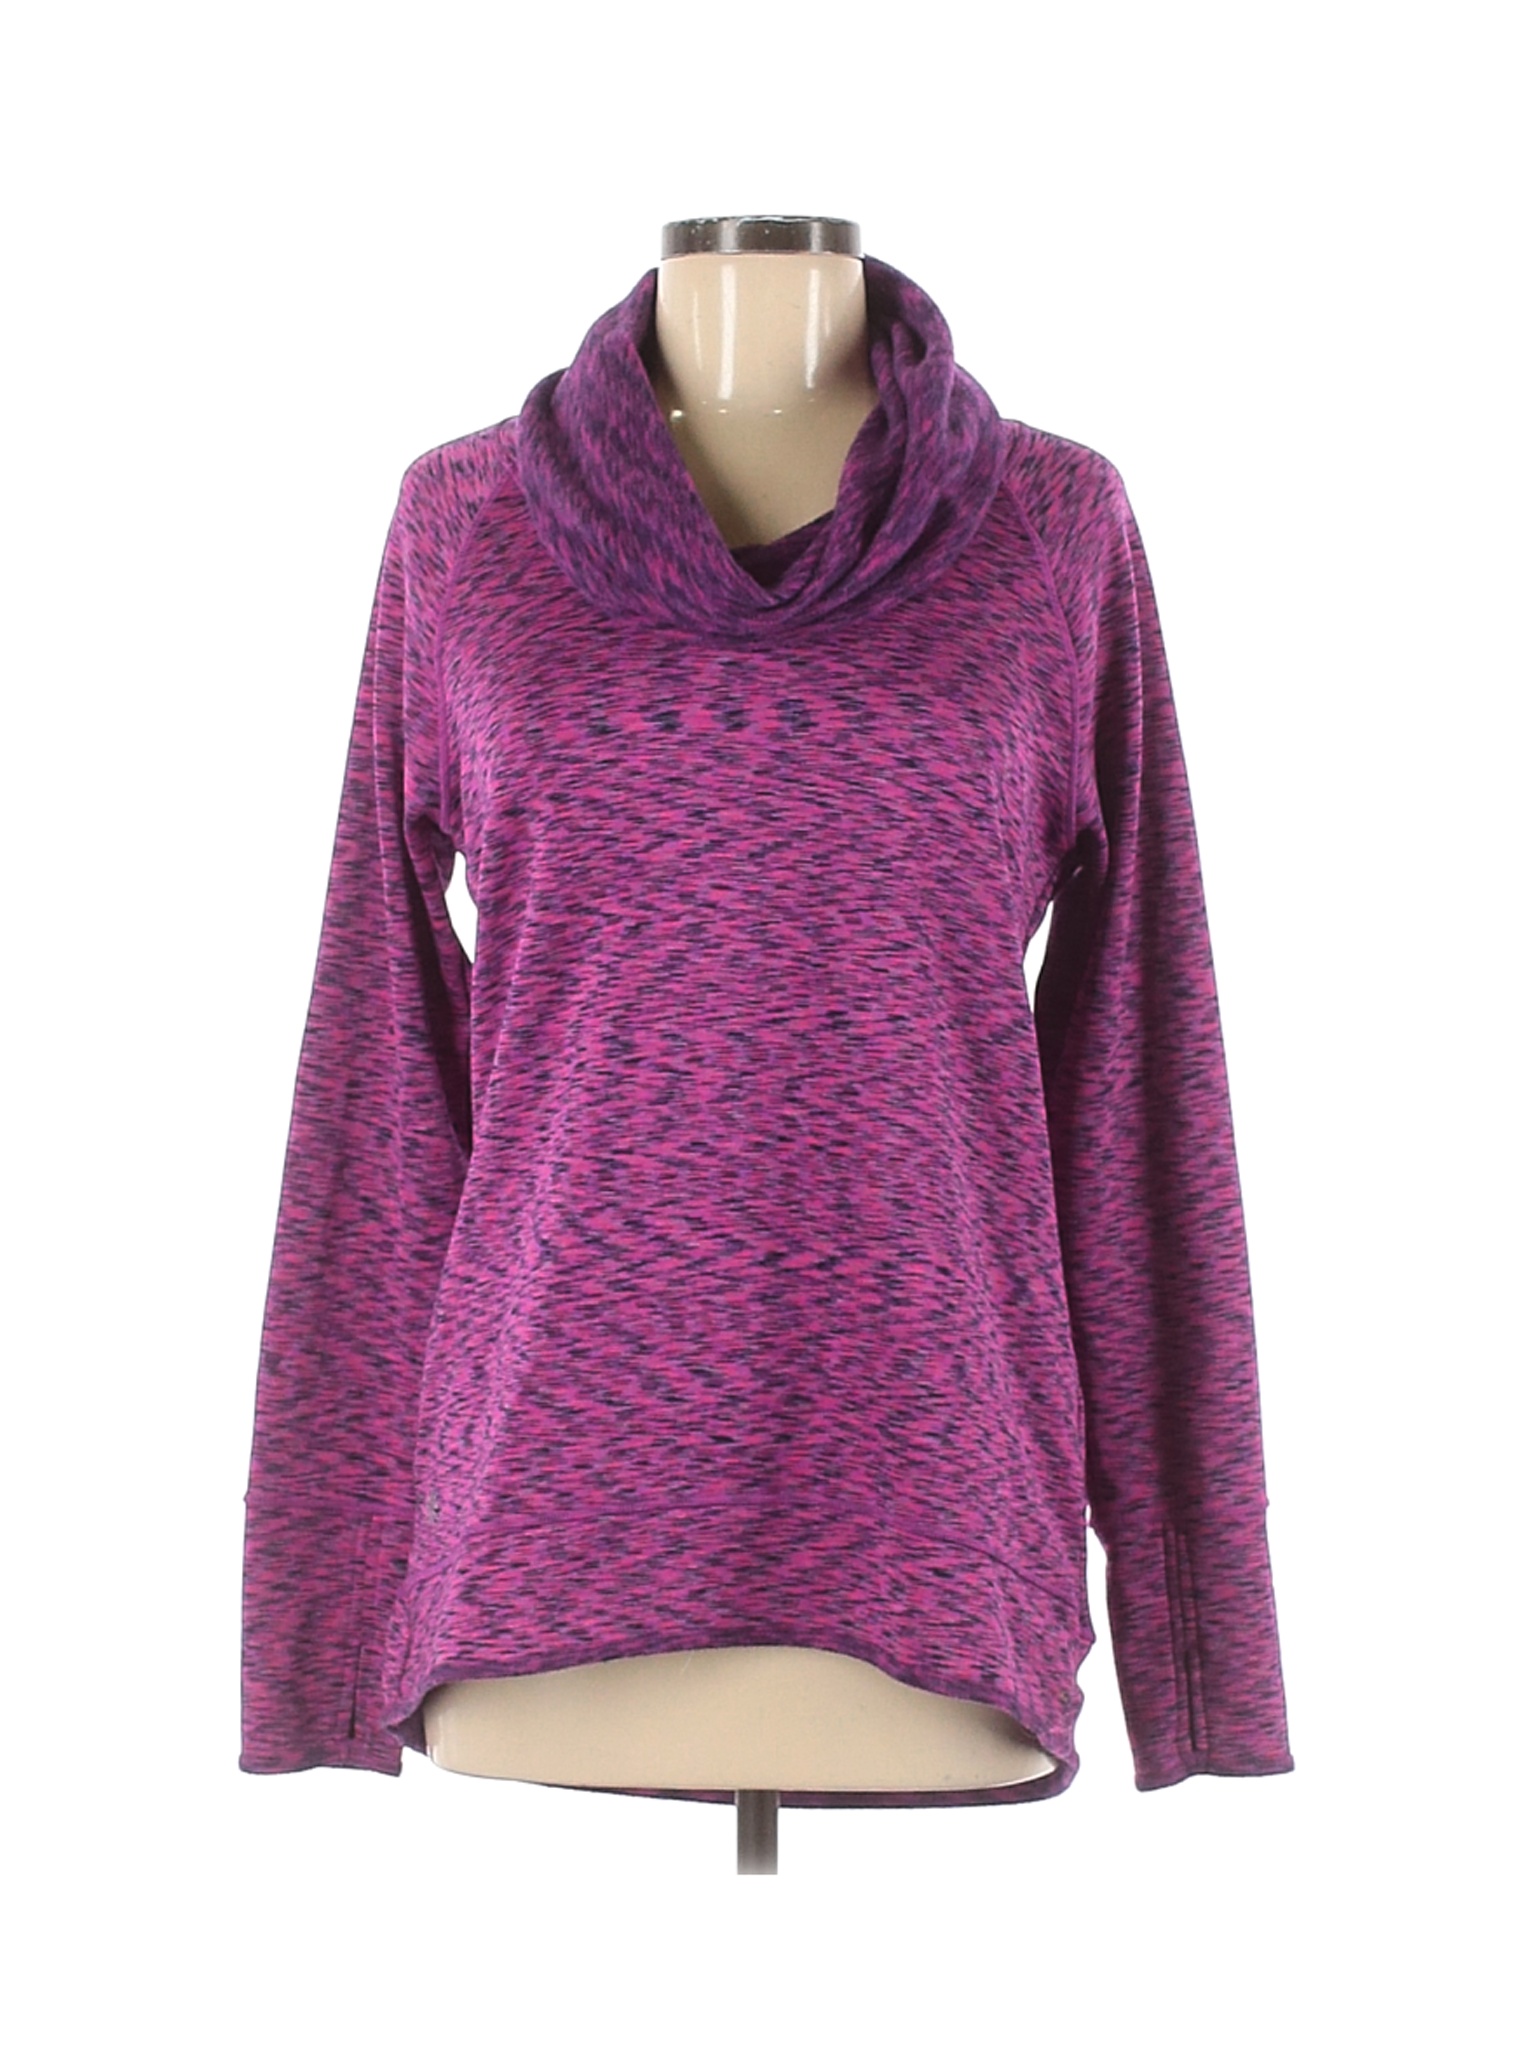 Athleta Women Purple Sweatshirt M | eBay